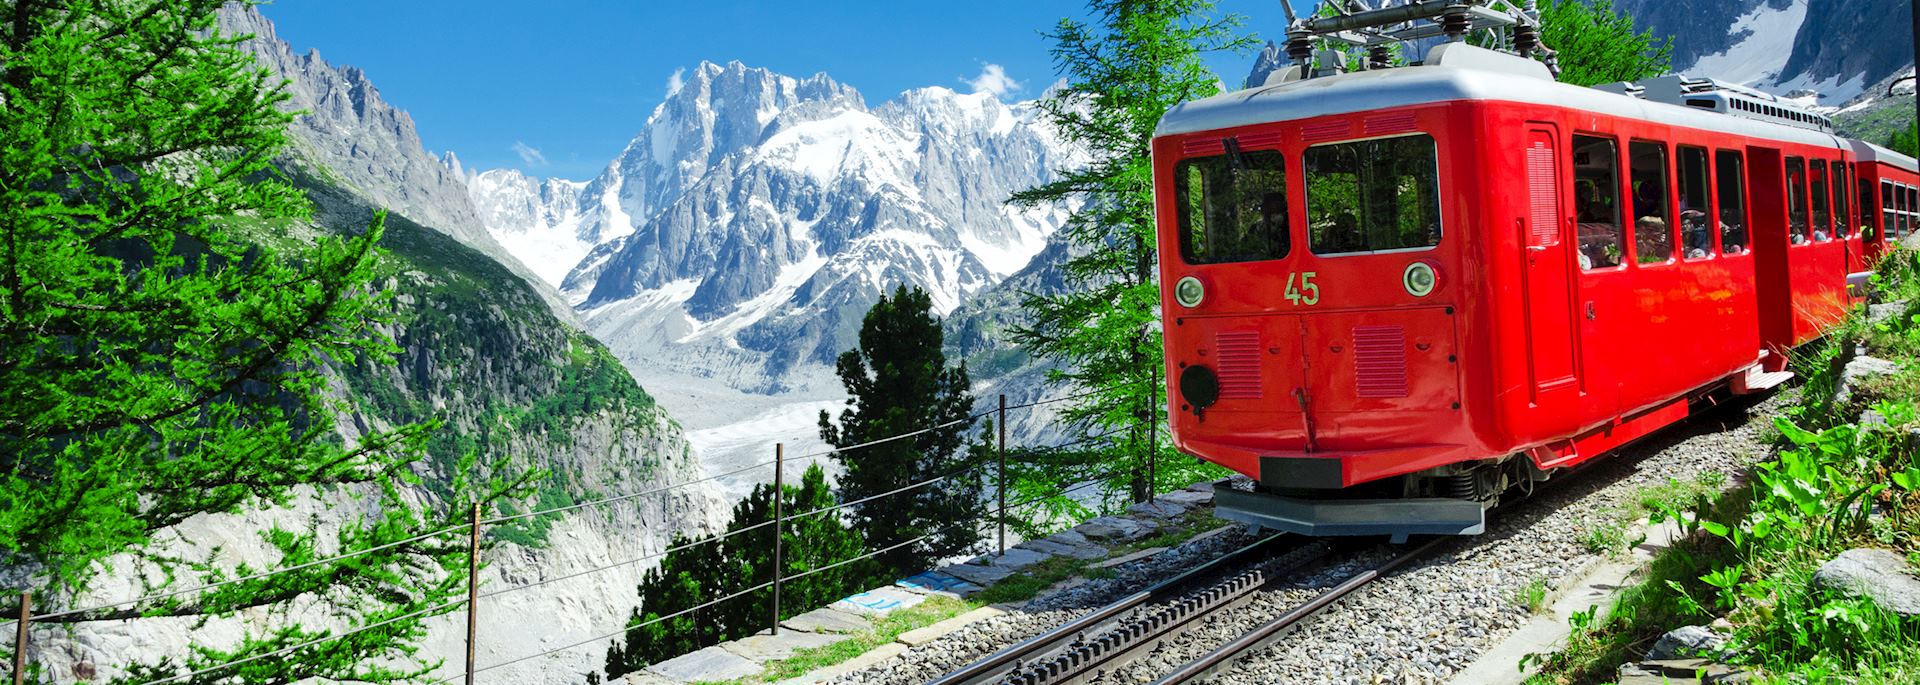 Cog railway in Chamonix, France